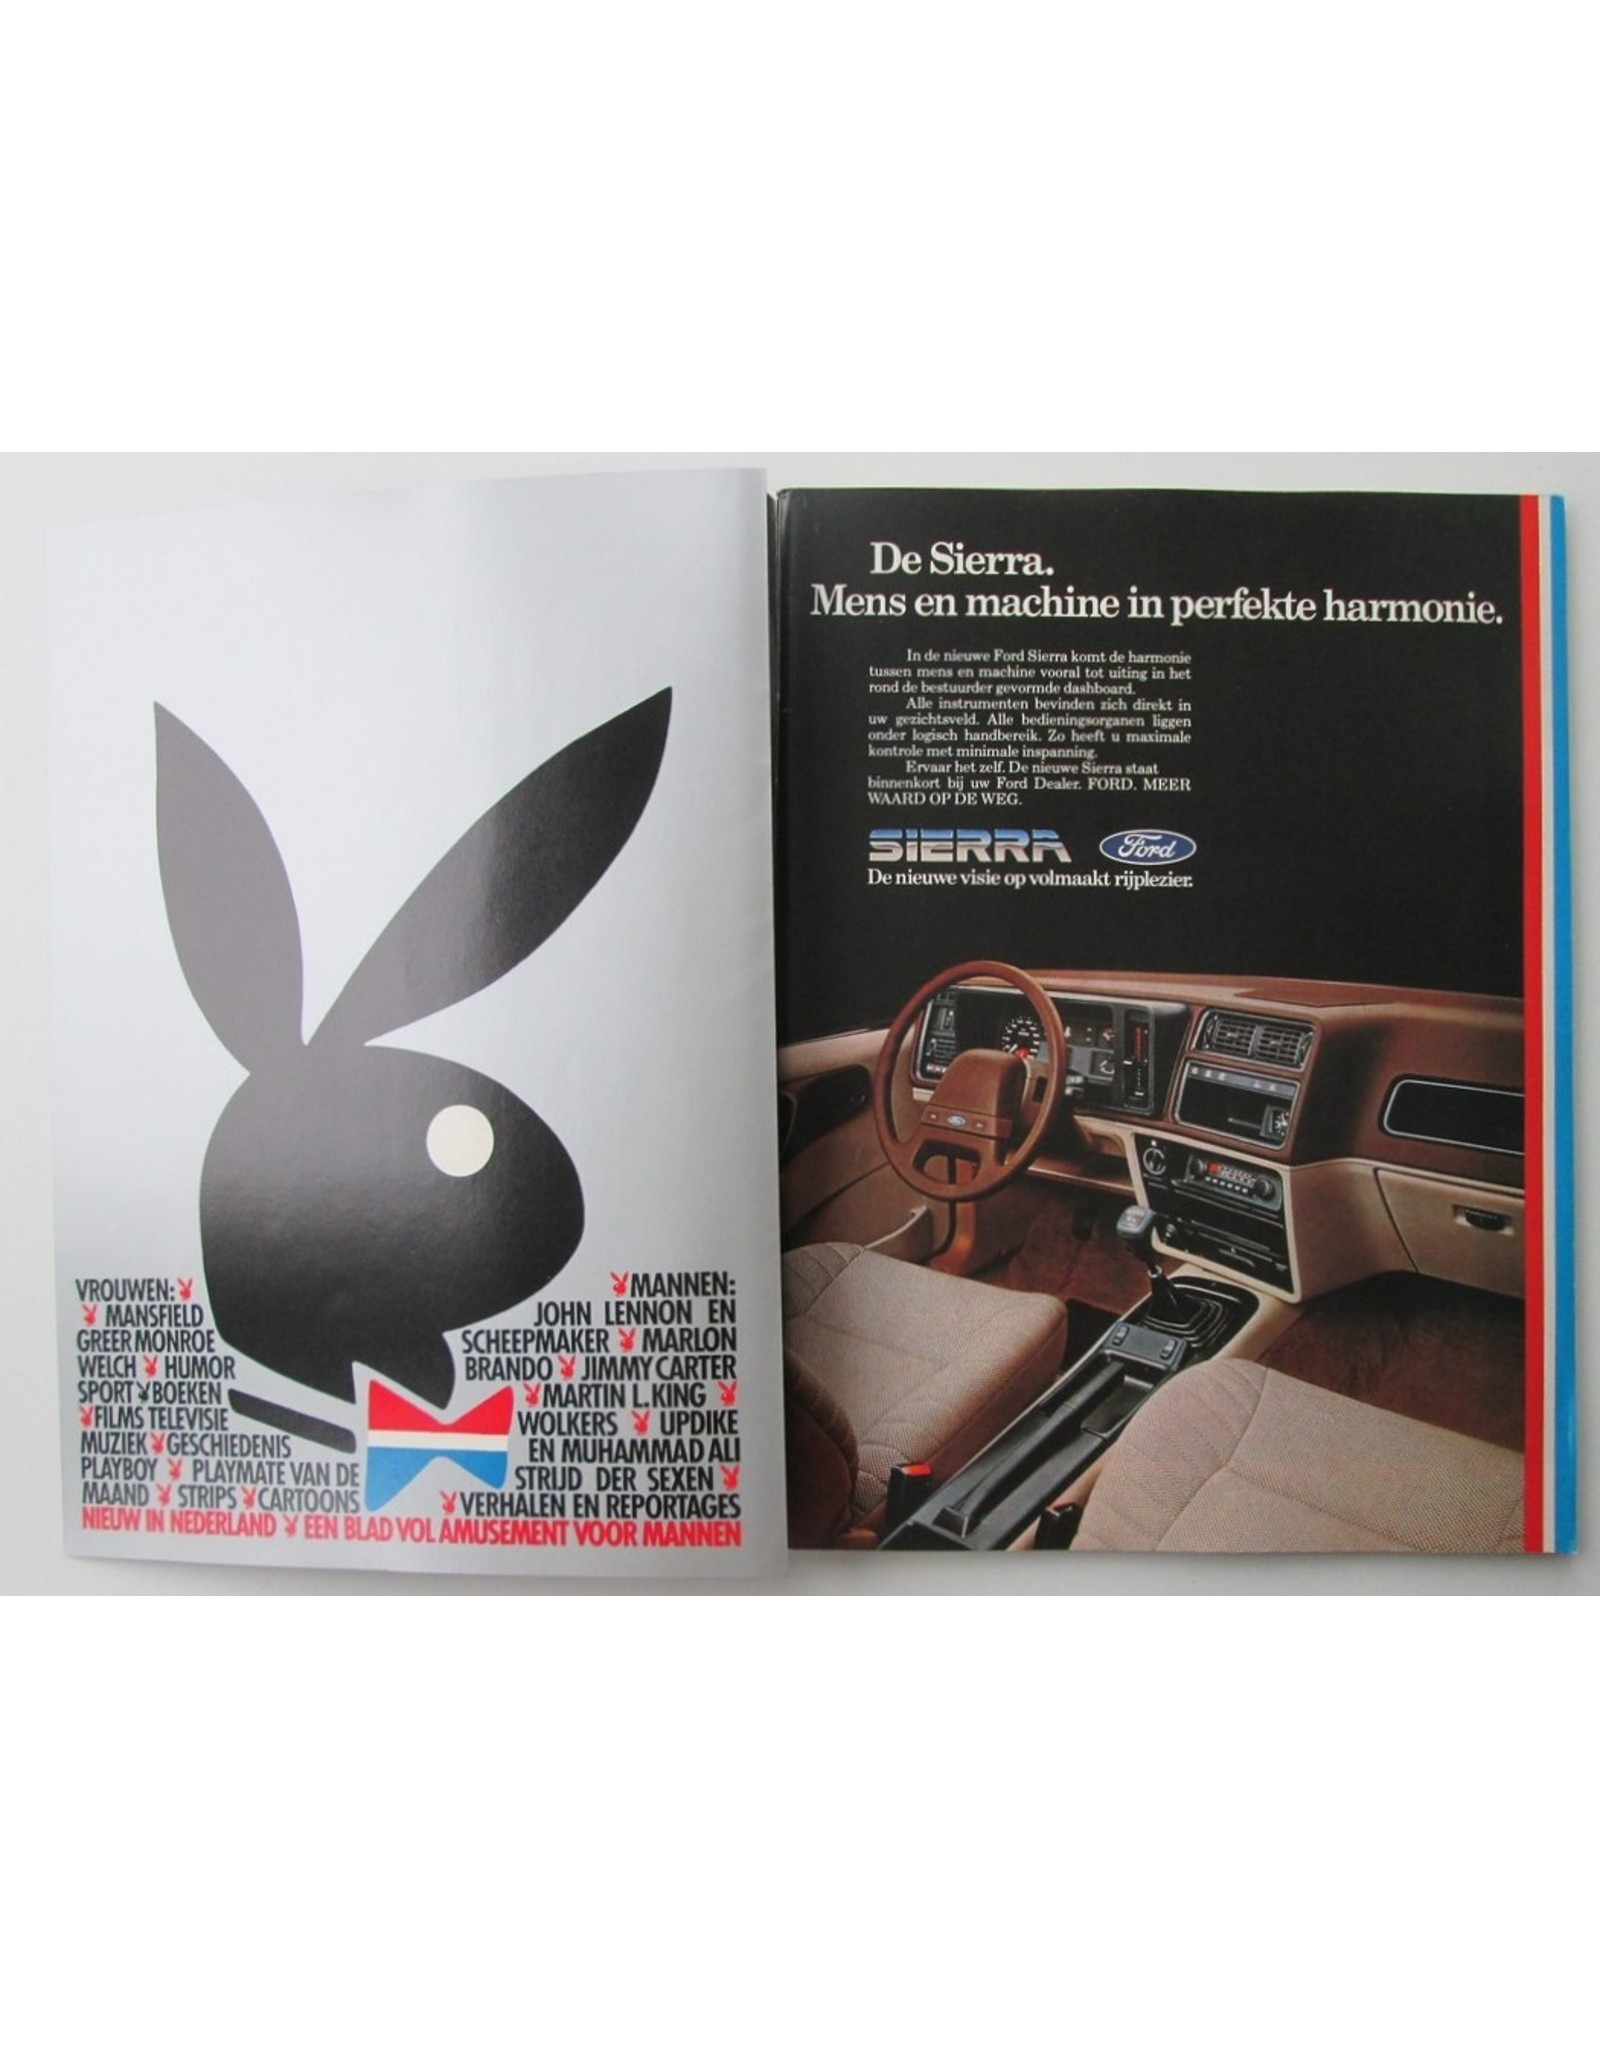 Jan Heemskerk [ed.] -  Playboy [Proefnummer 1]: Oktober. Made in Holland